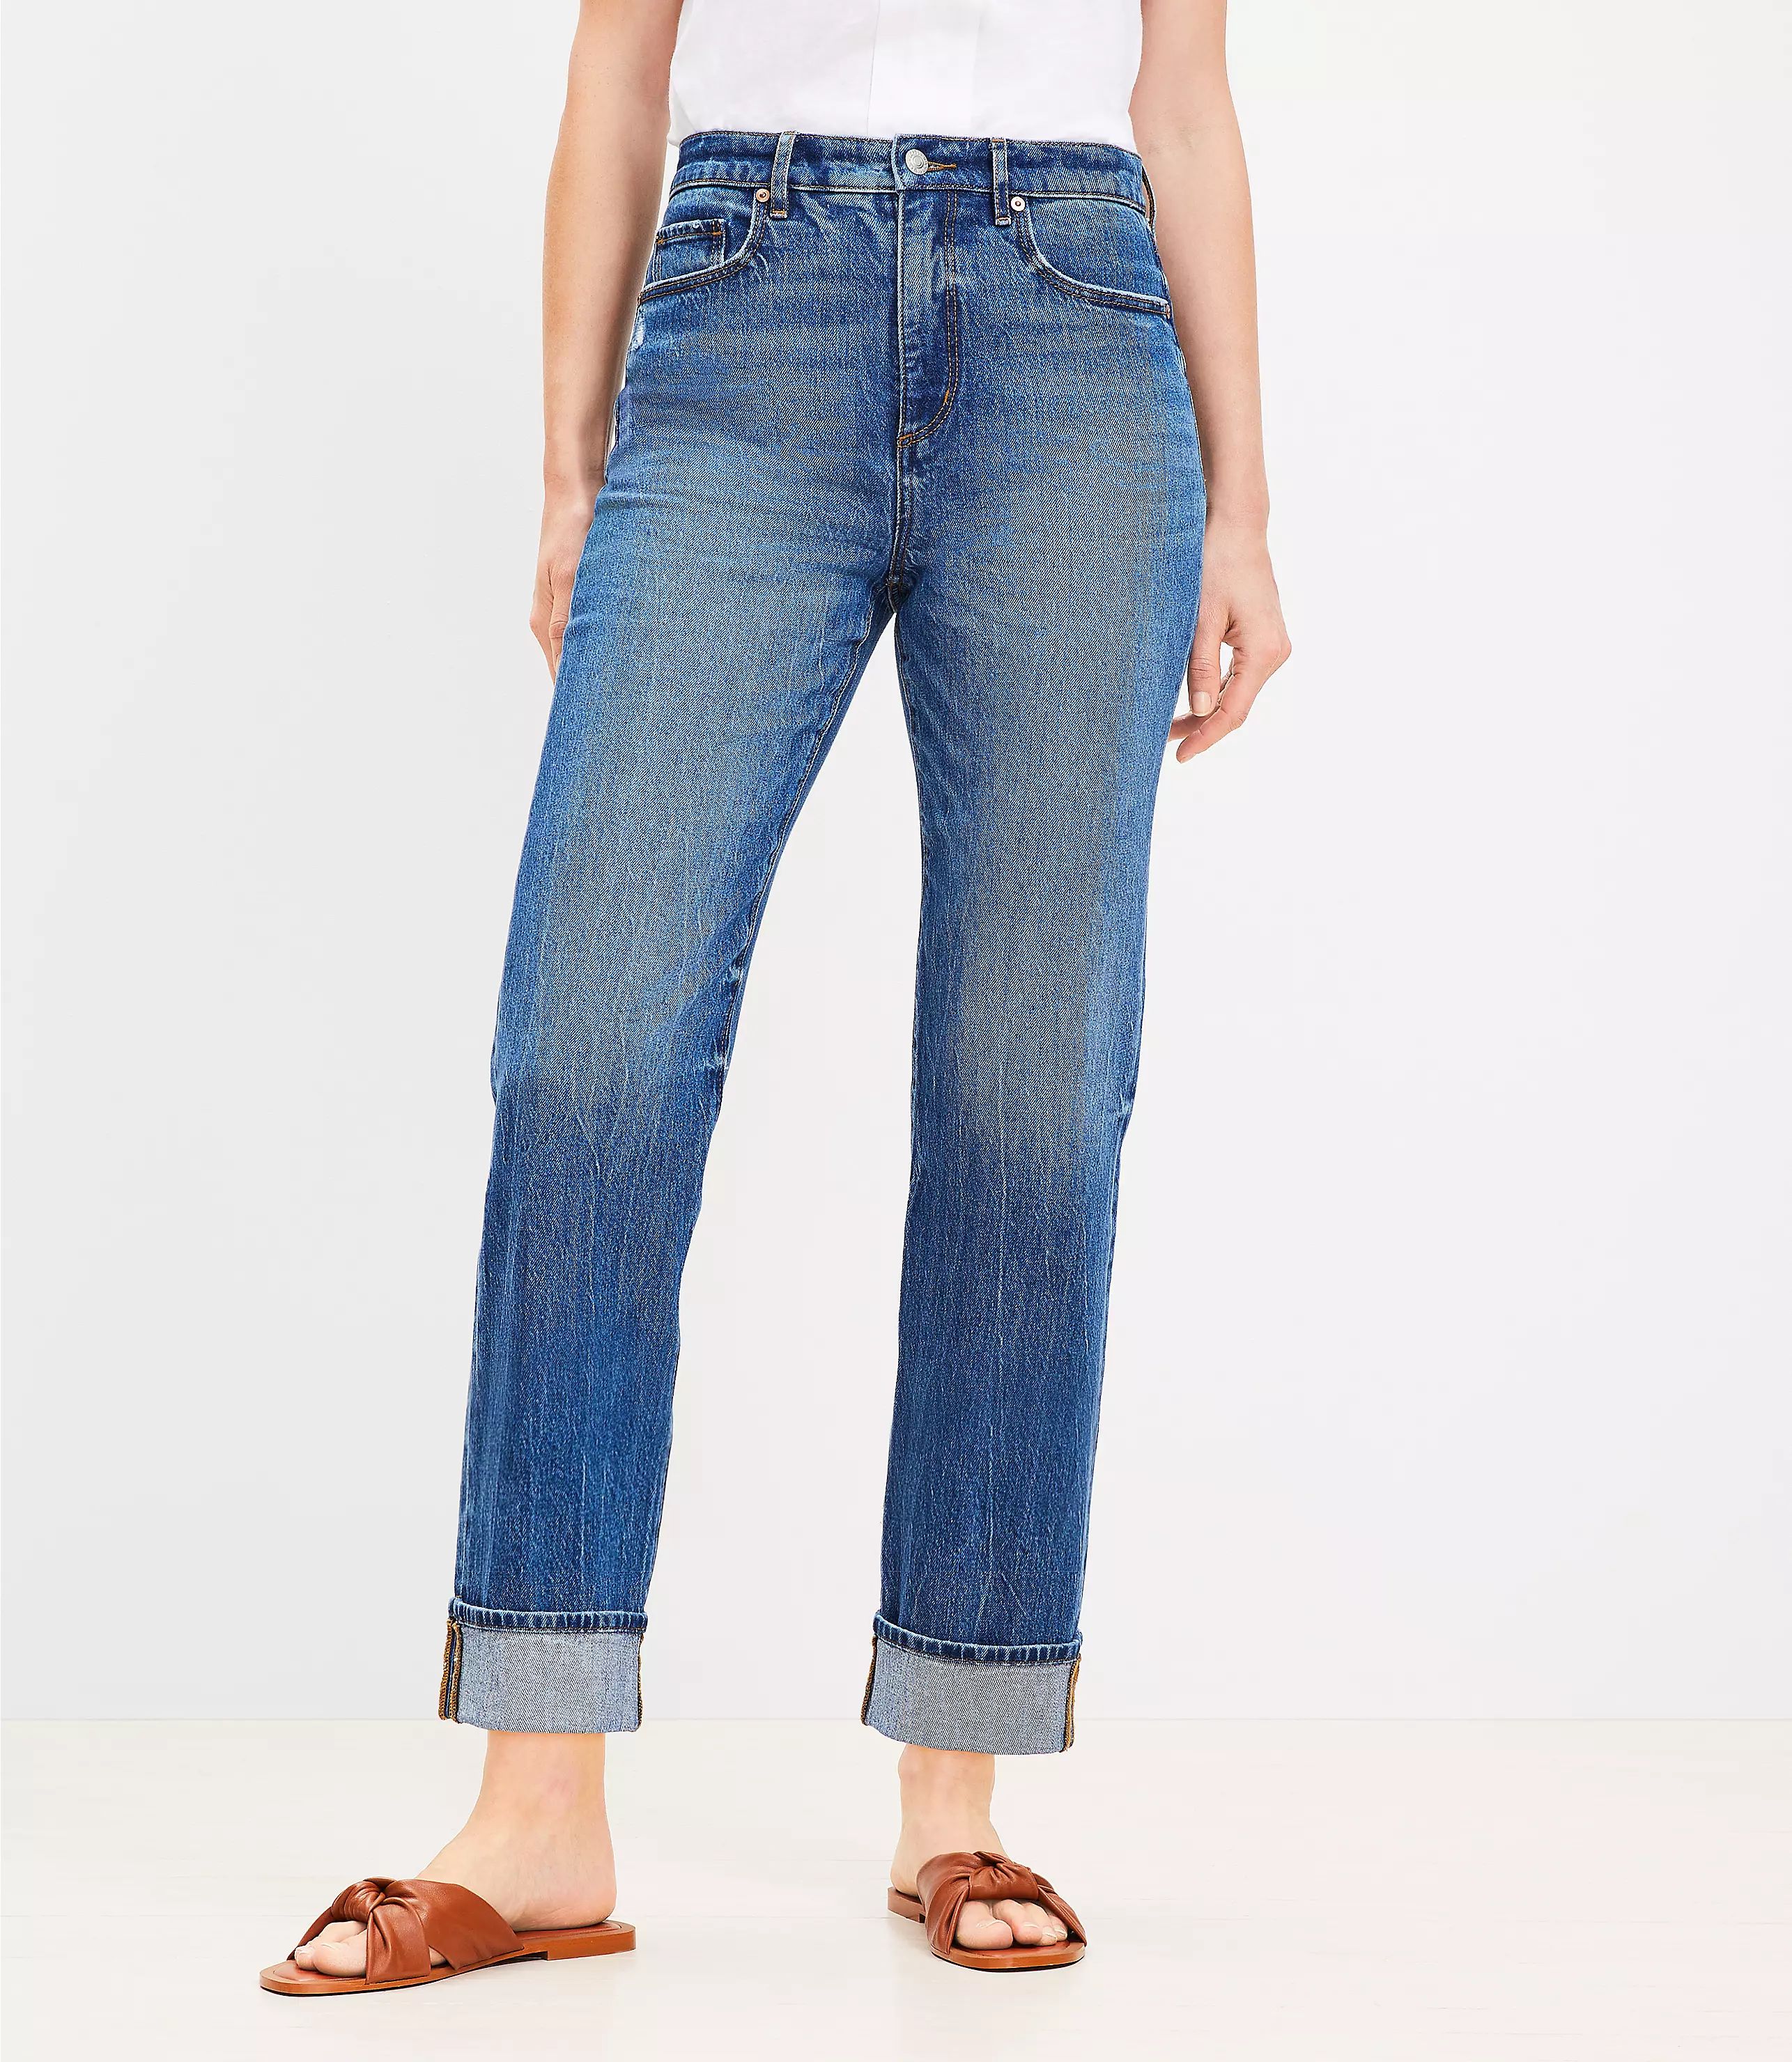 Petite Cuffed High Rise Straight Jeans in Bright Mid Indigo Wash | LOFT